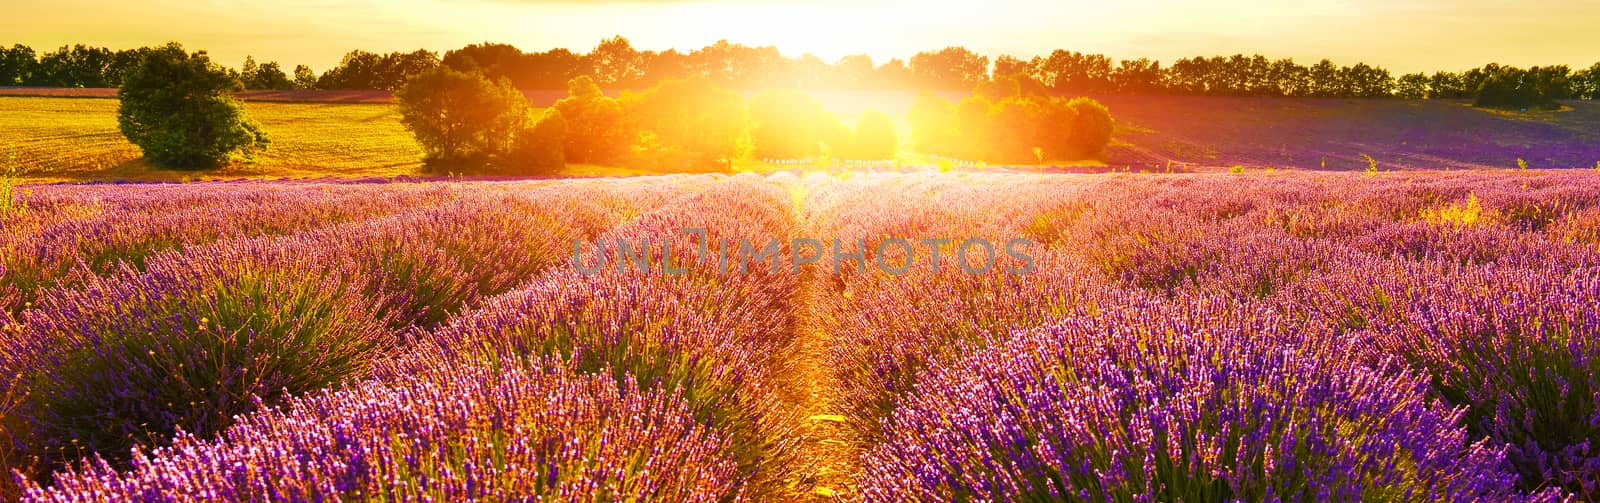 Lavender field at sunset by Lazarenko